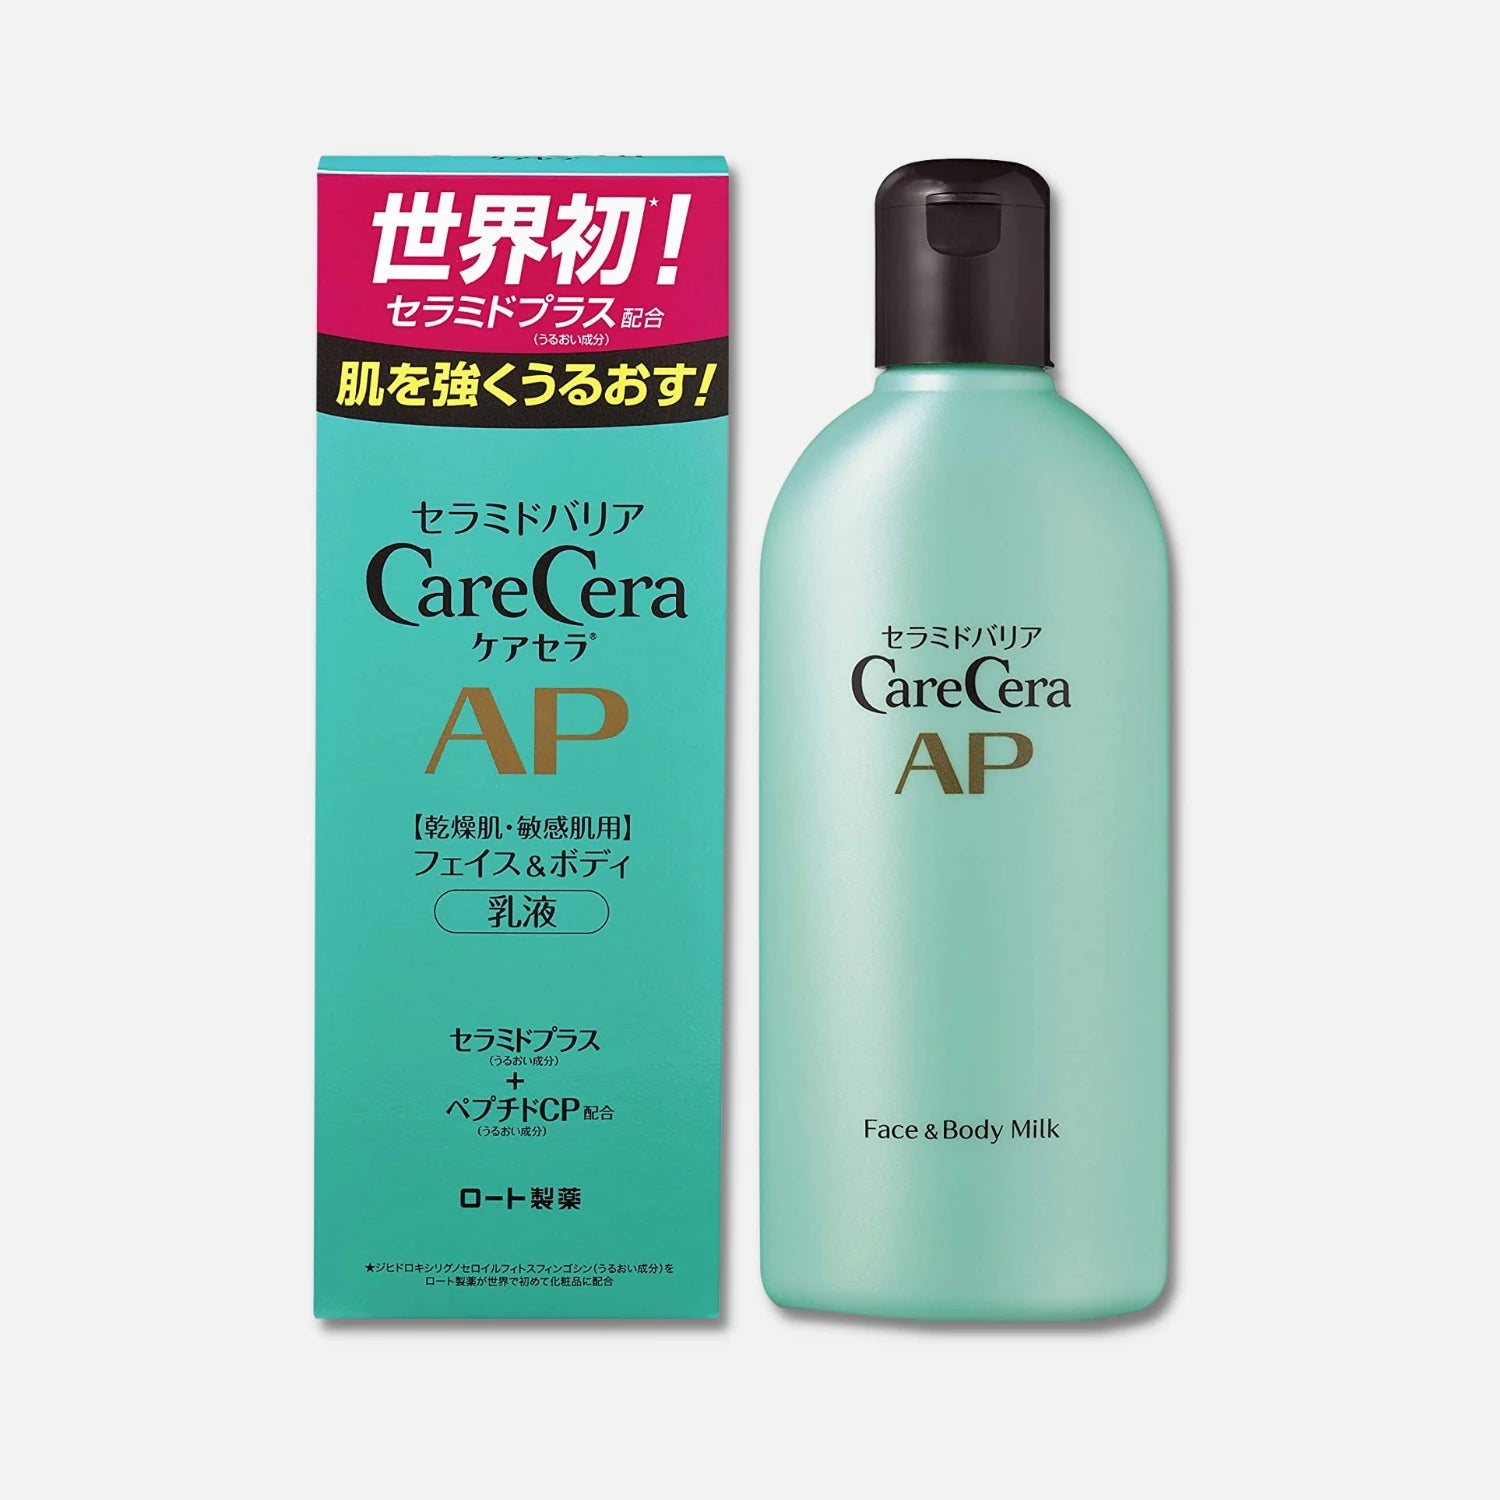 CareCera AP Face & Body Milk 200ml - Buy Me Japan